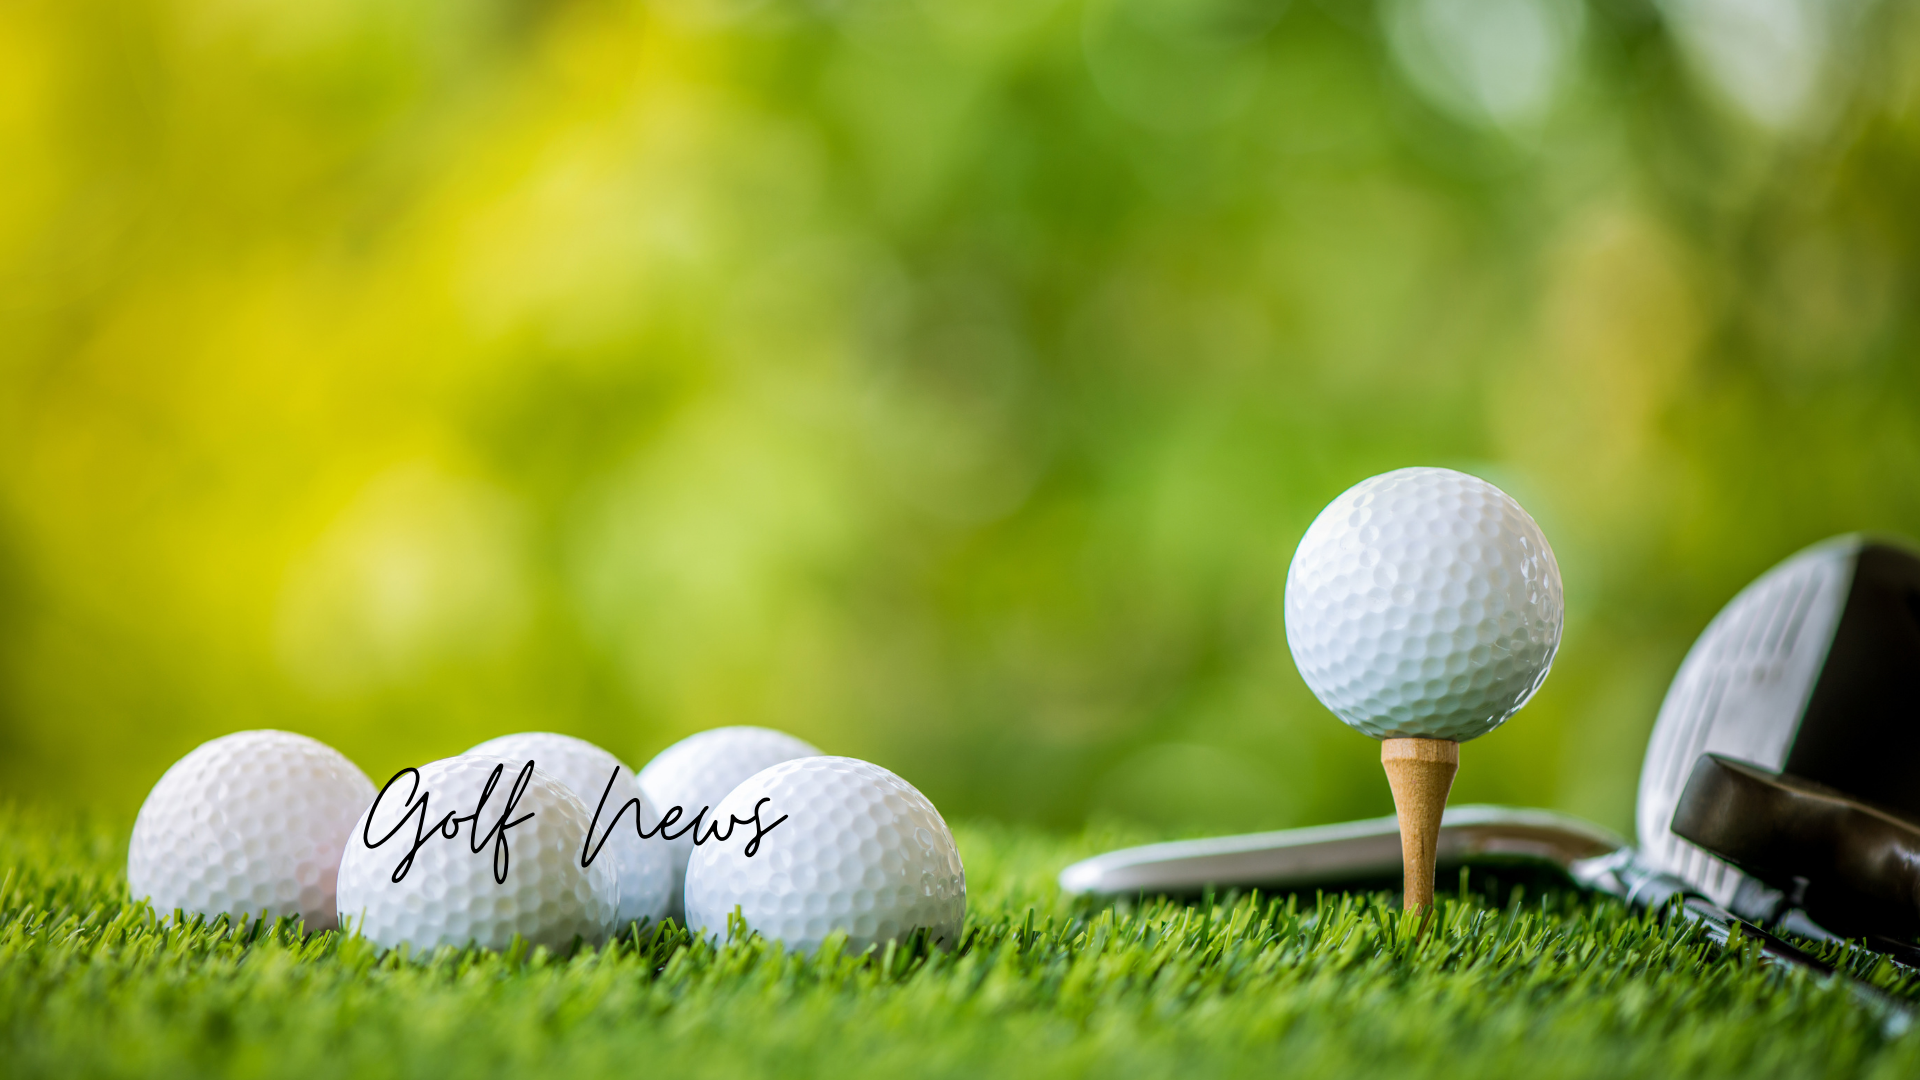 Golf is both rewarding and elusive